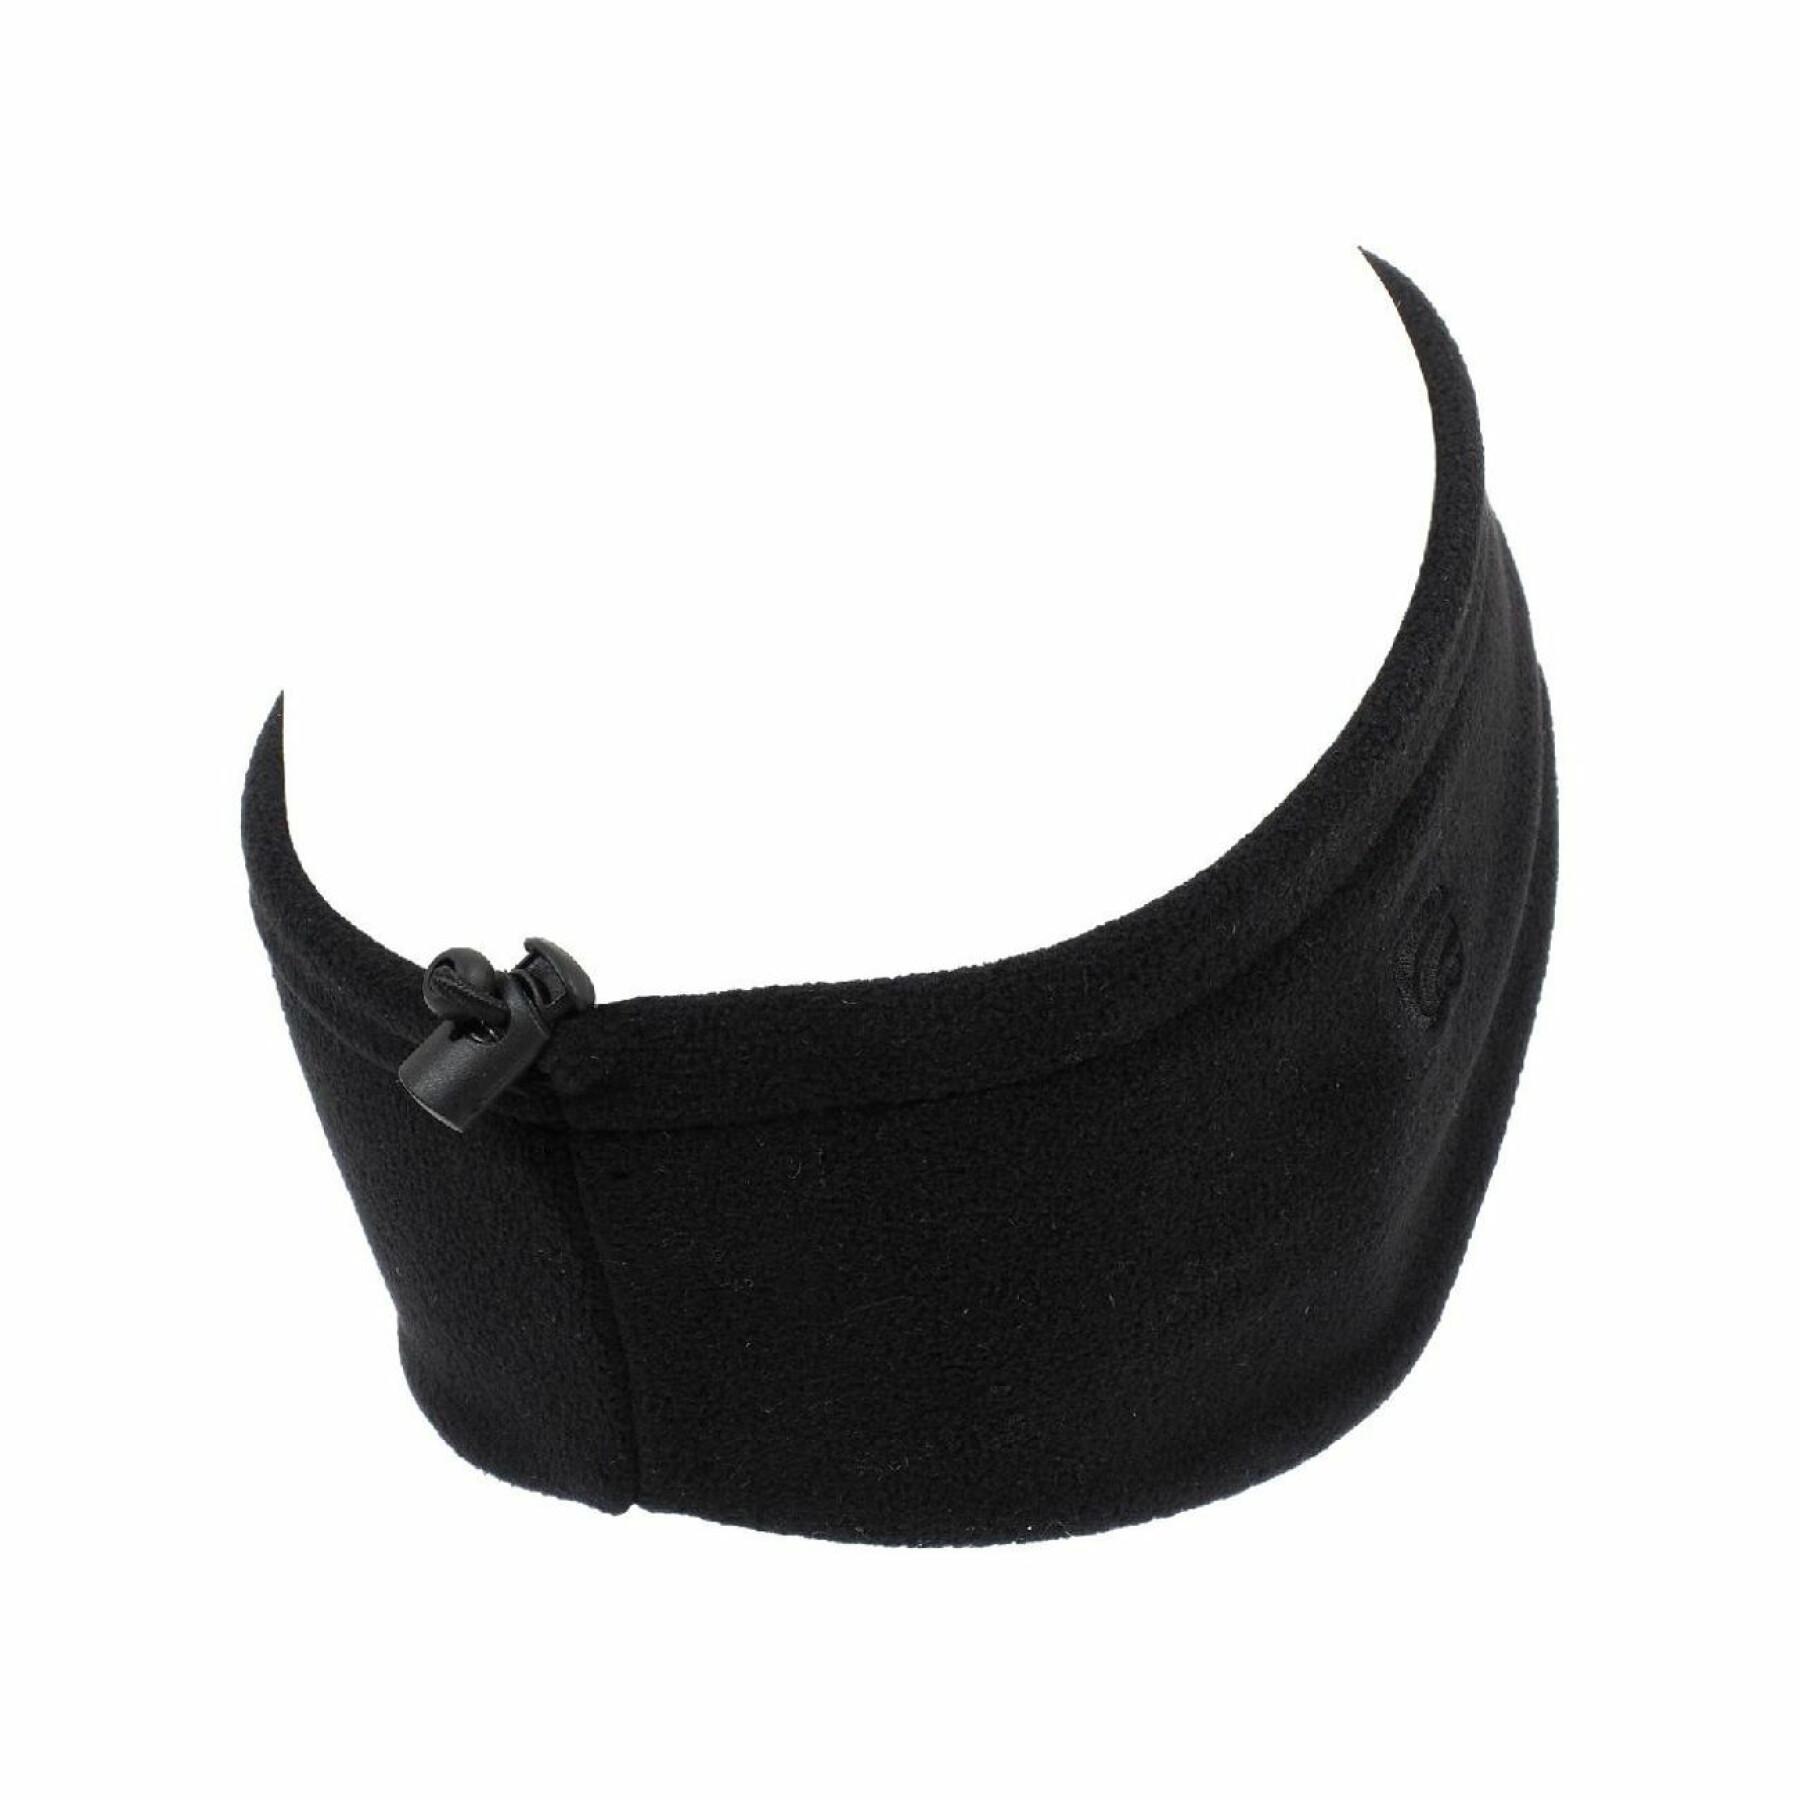 Adjustable headband Cairn Polar